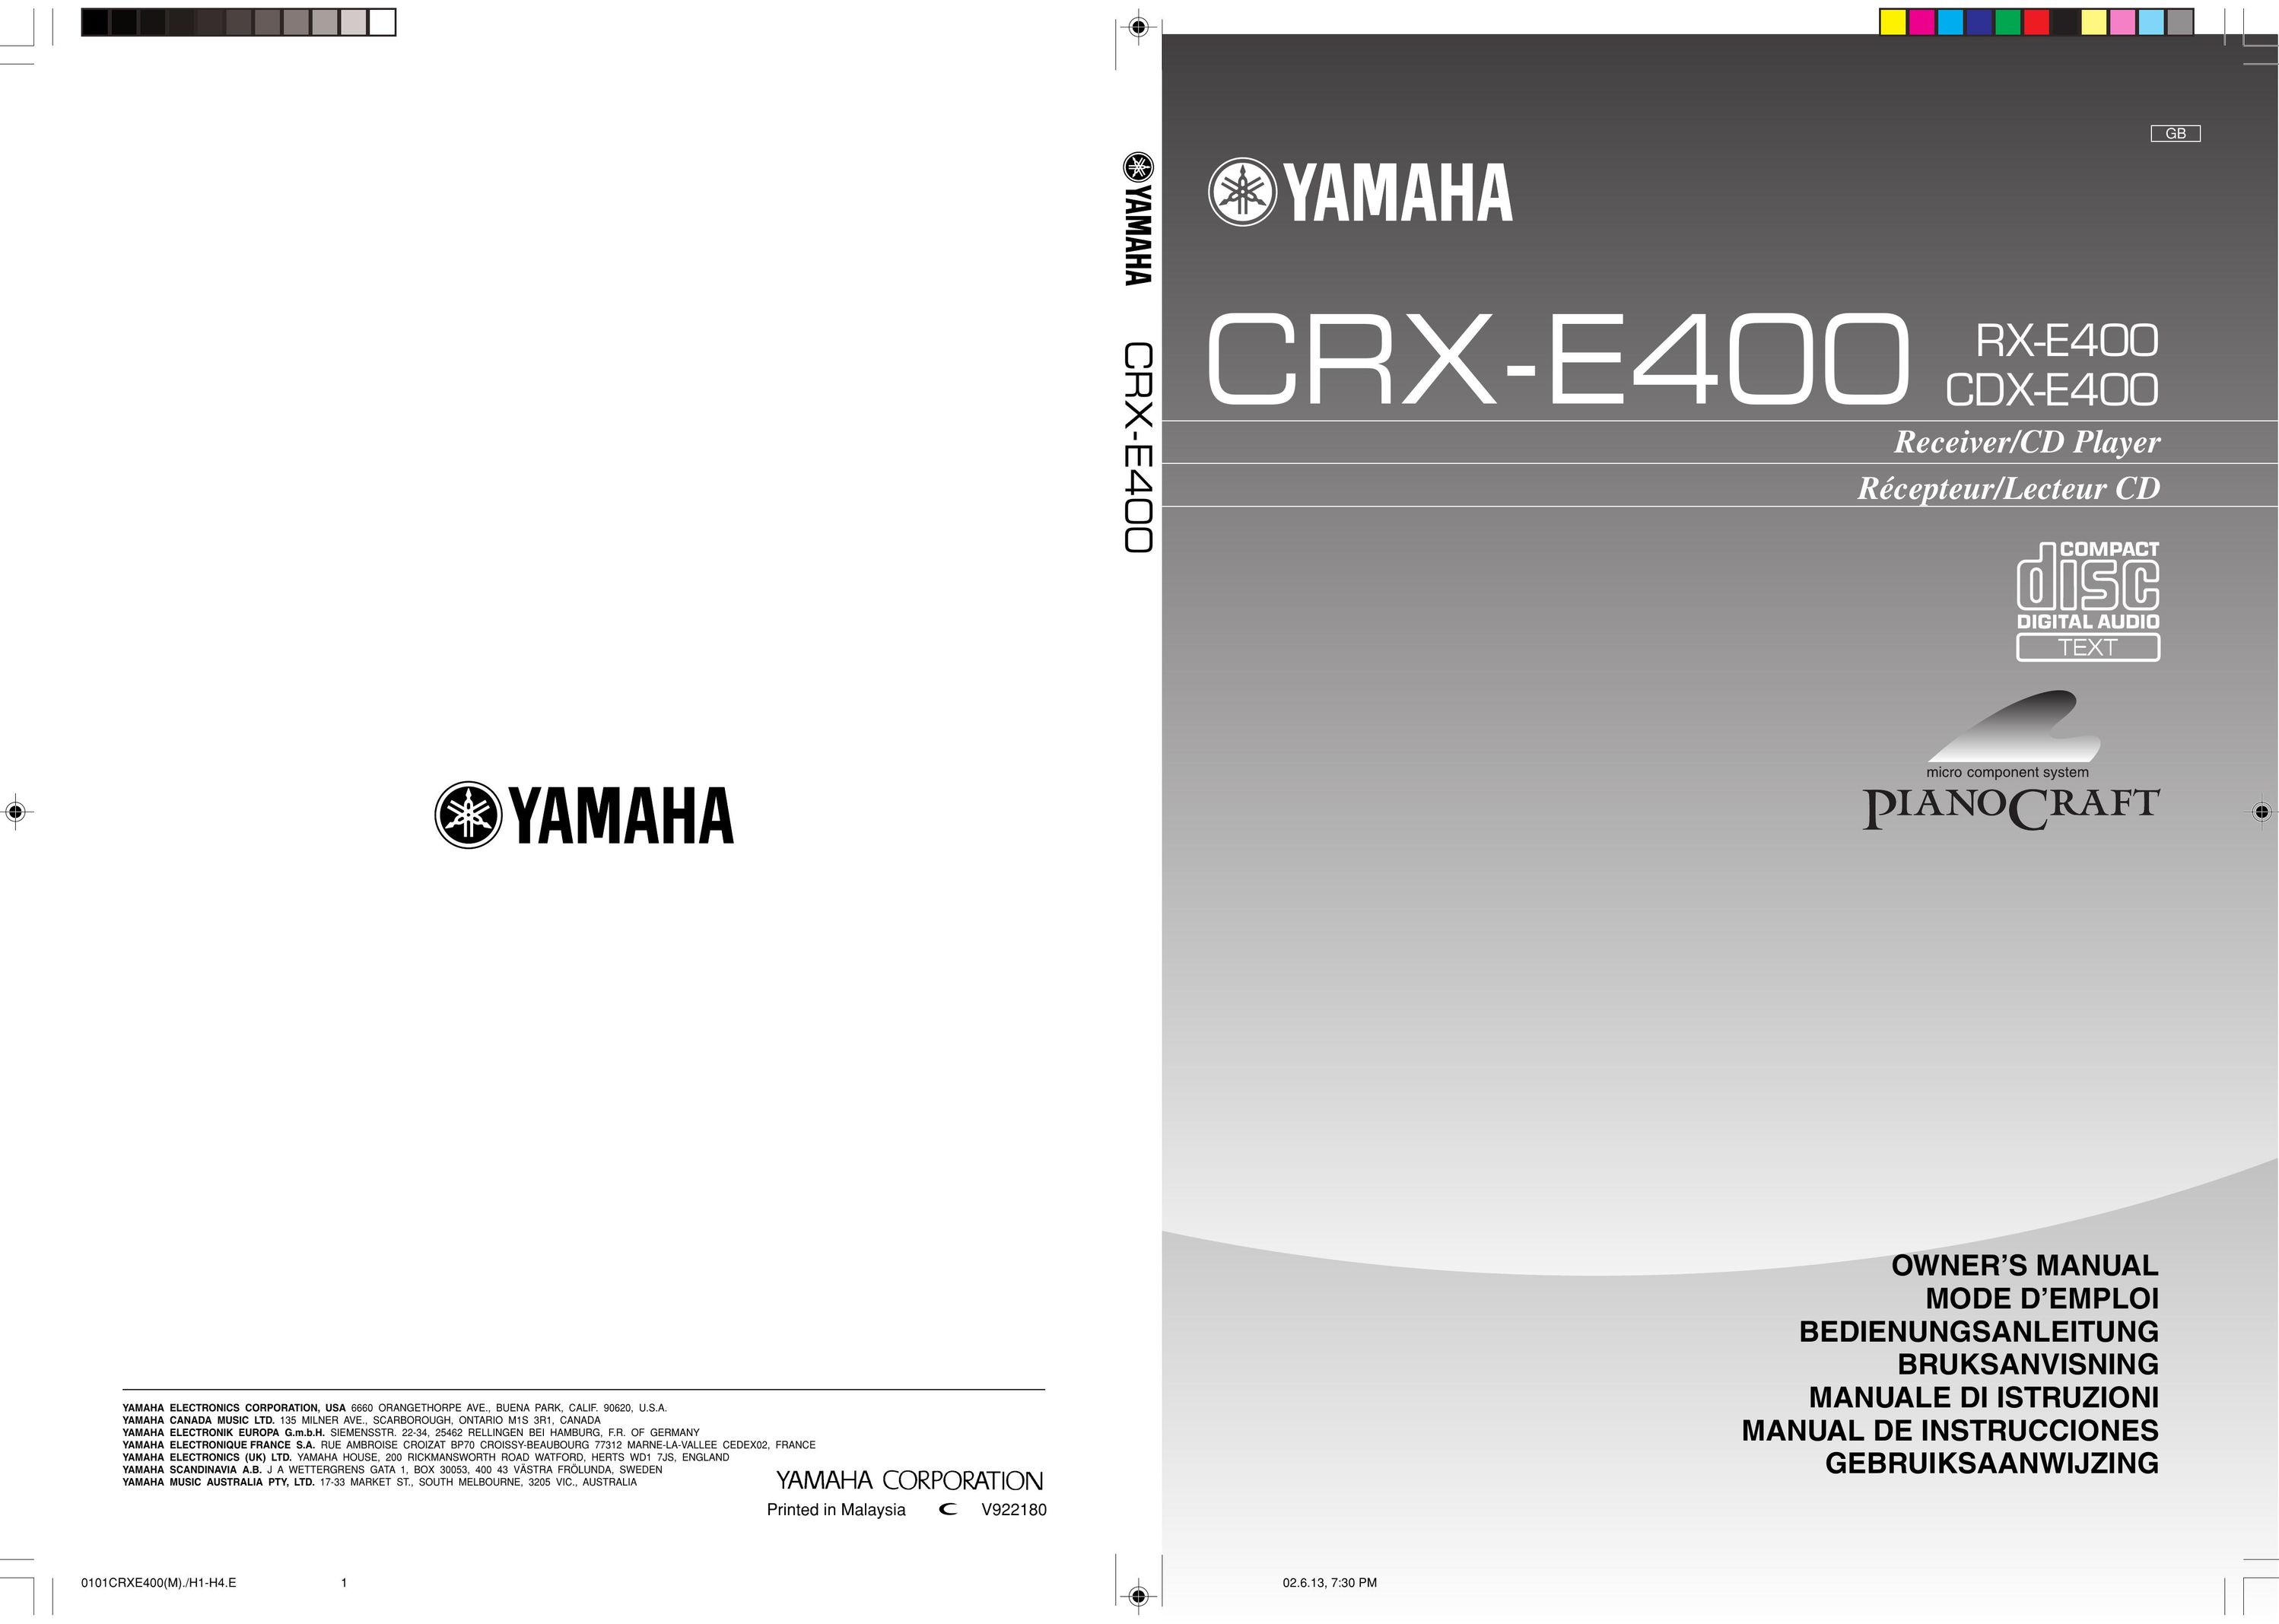 Yamaha CDX-E400 CD Player User Manual